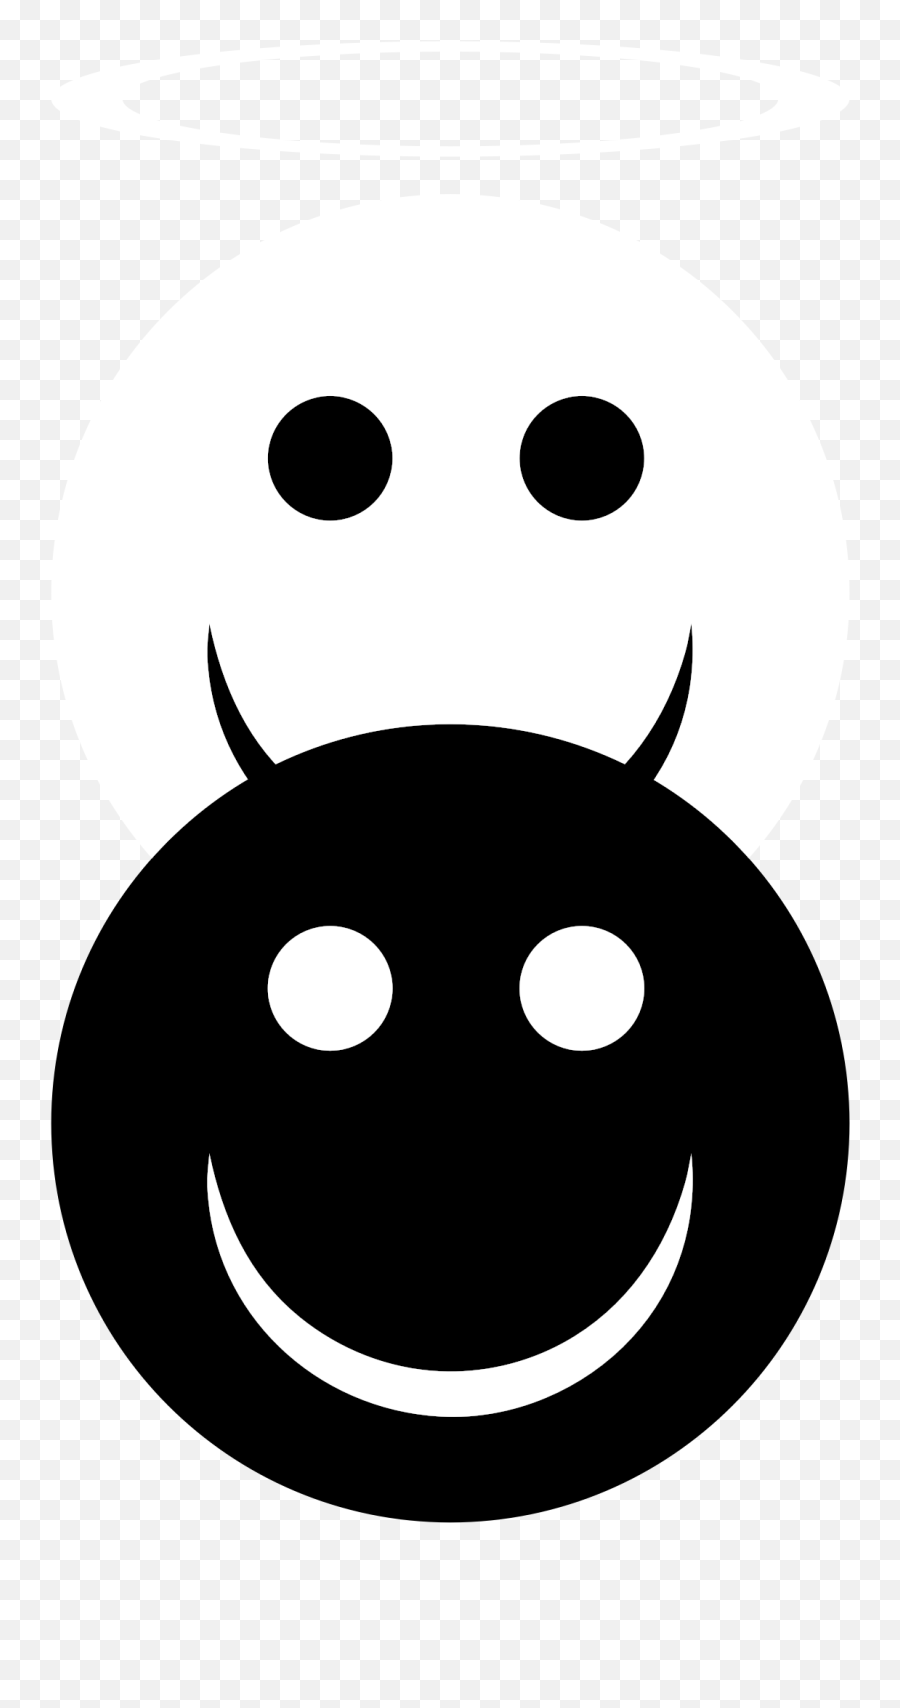 Big Smile Emoji Clipart Black And White No Background - Black And White Smile Emoji,Emoji Clipart Black And White